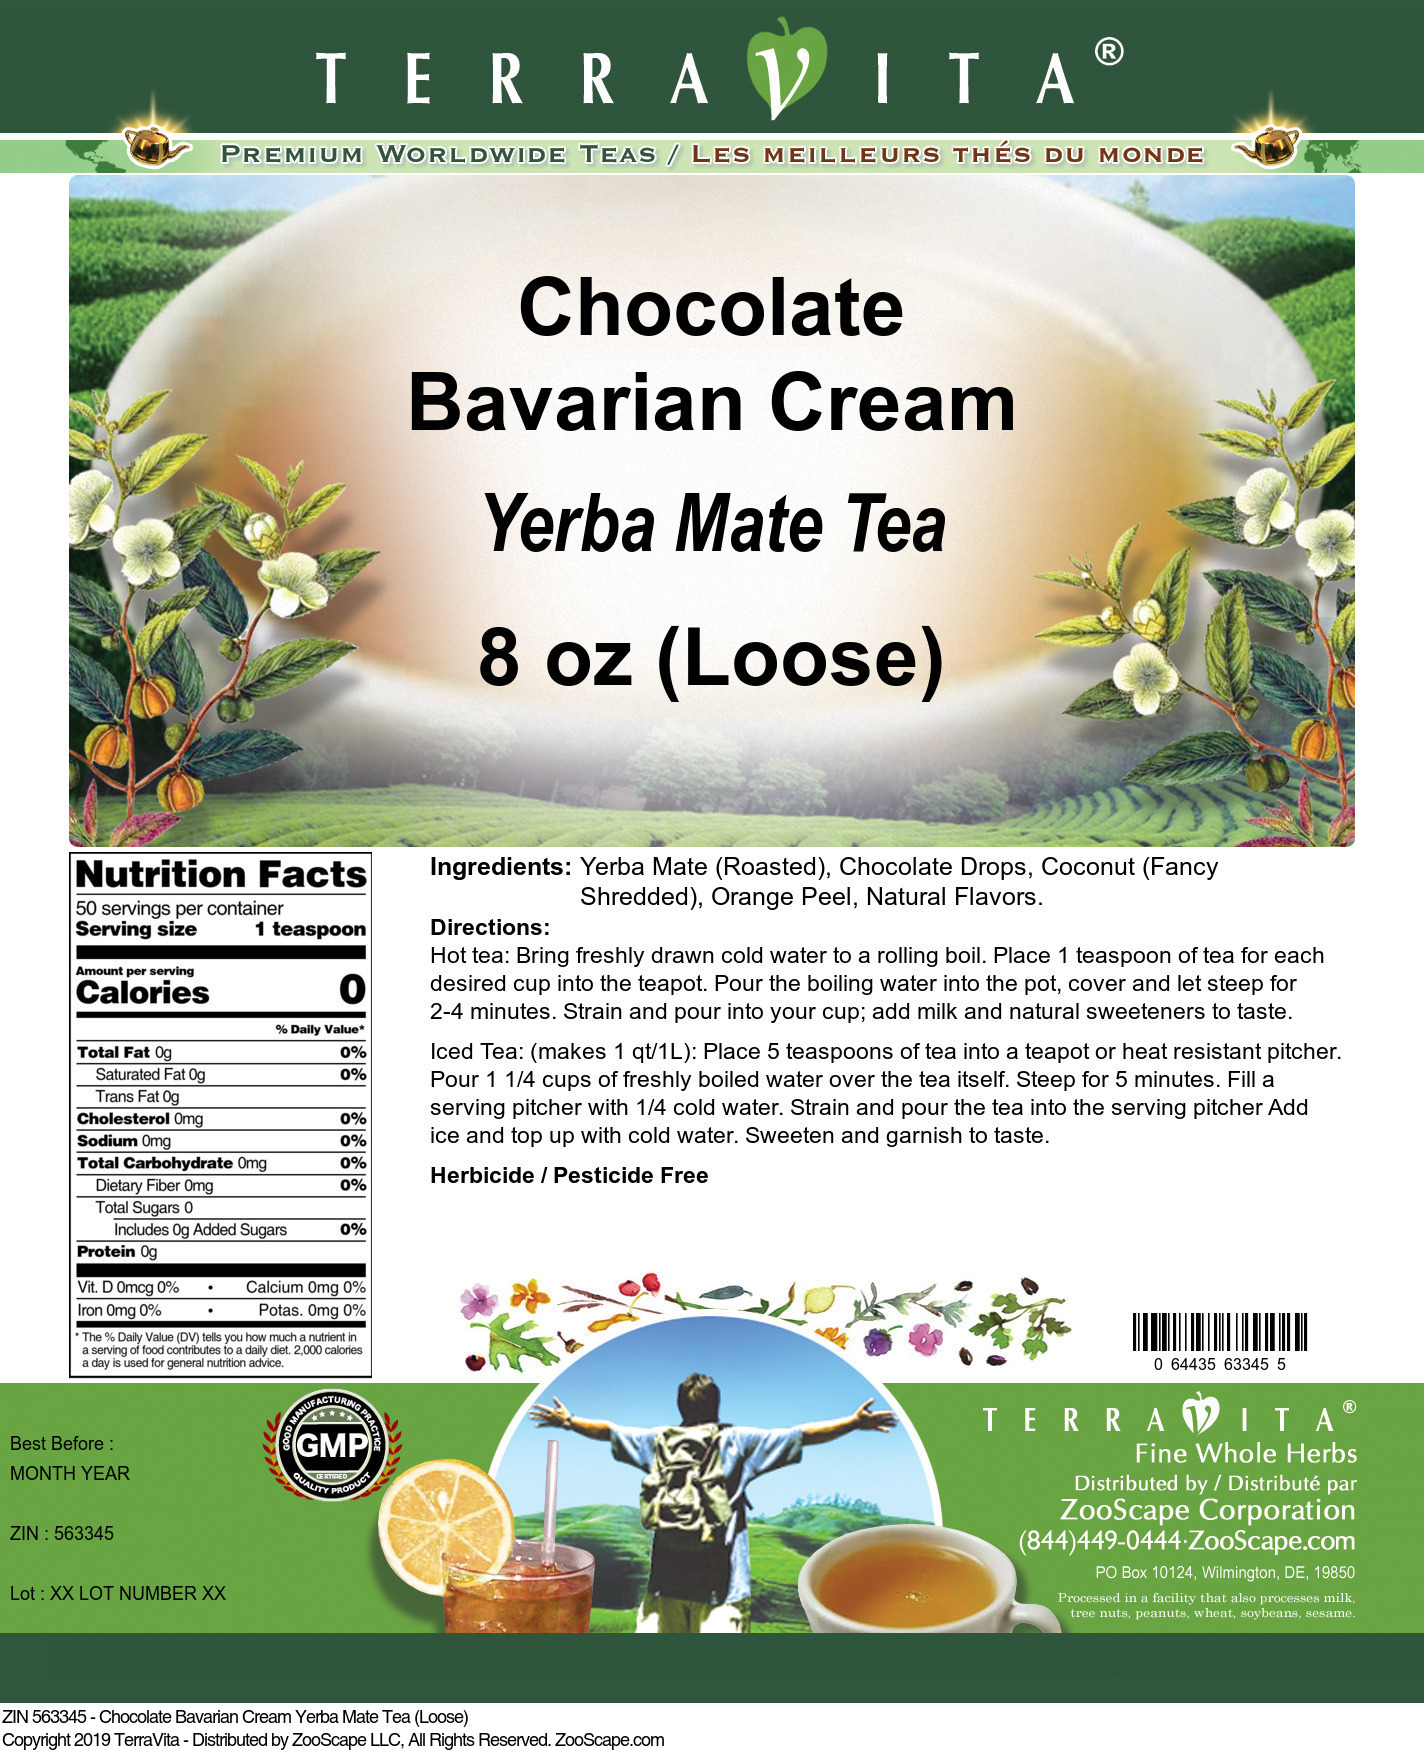 Chocolate Bavarian Cream Yerba Mate Tea (Loose) - Label